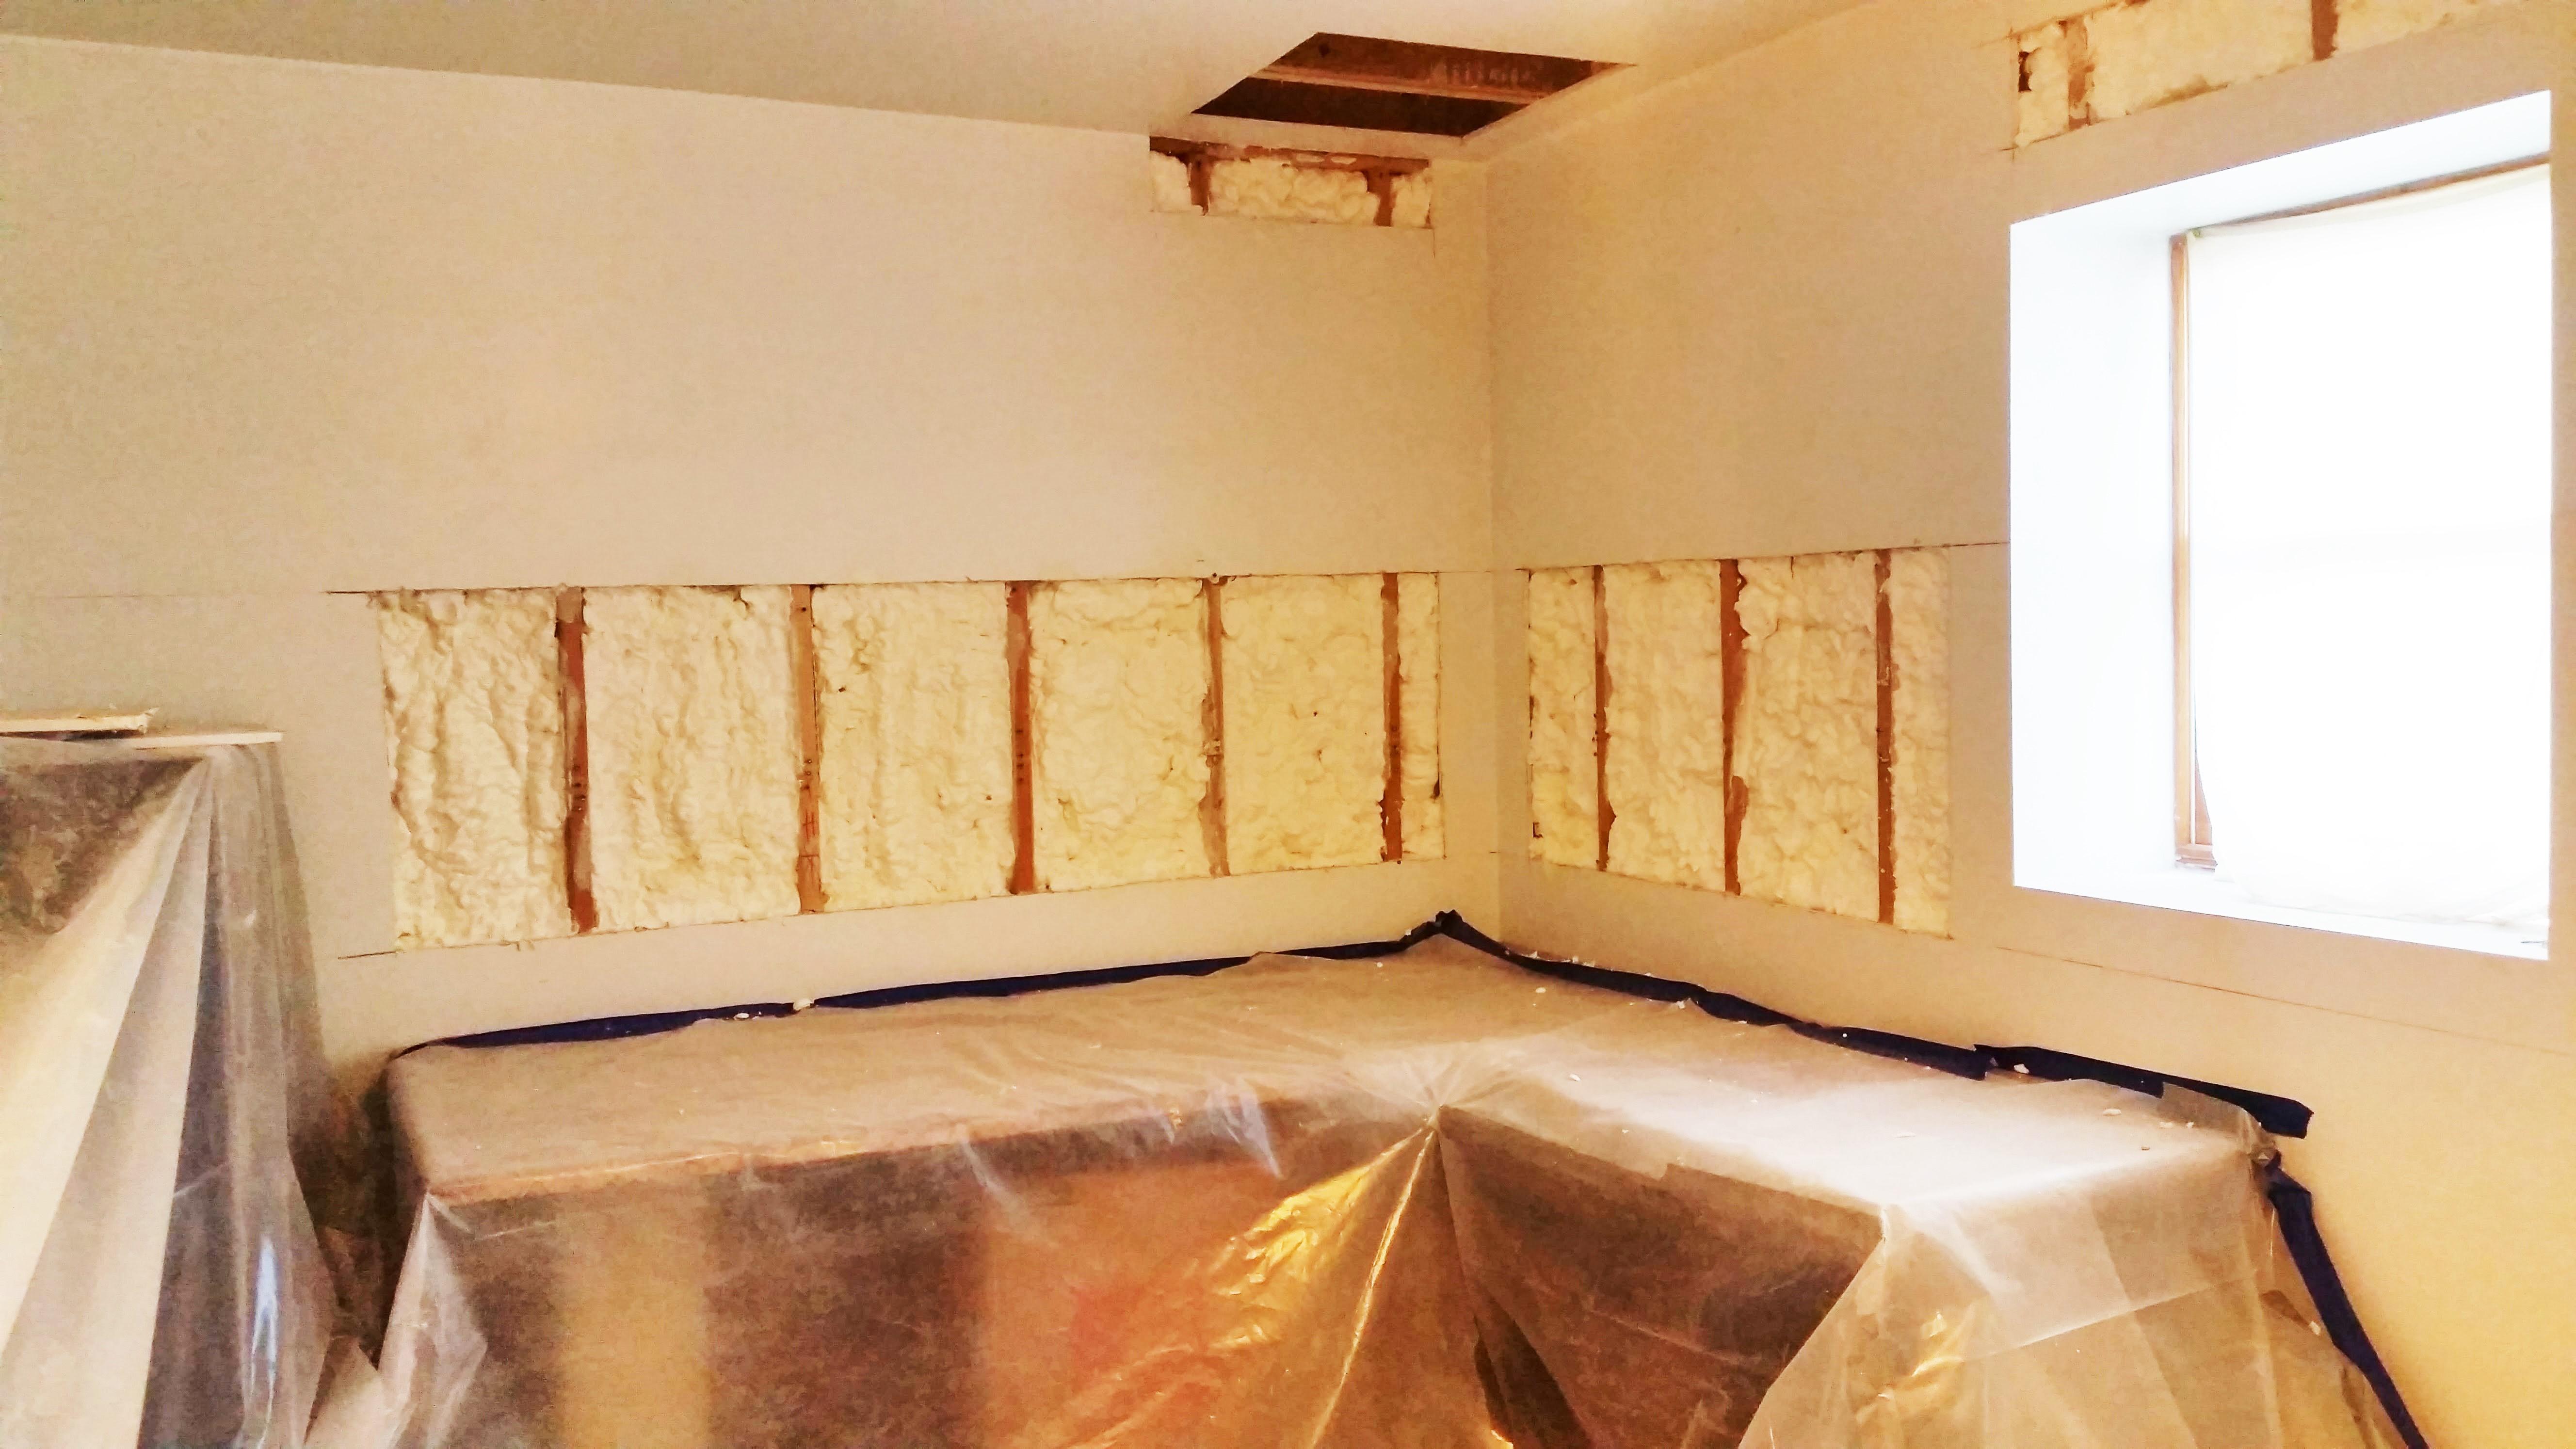 Retrofit Basement Exterior Walls - Spray Foam Insulation Staten Island, NY 10301